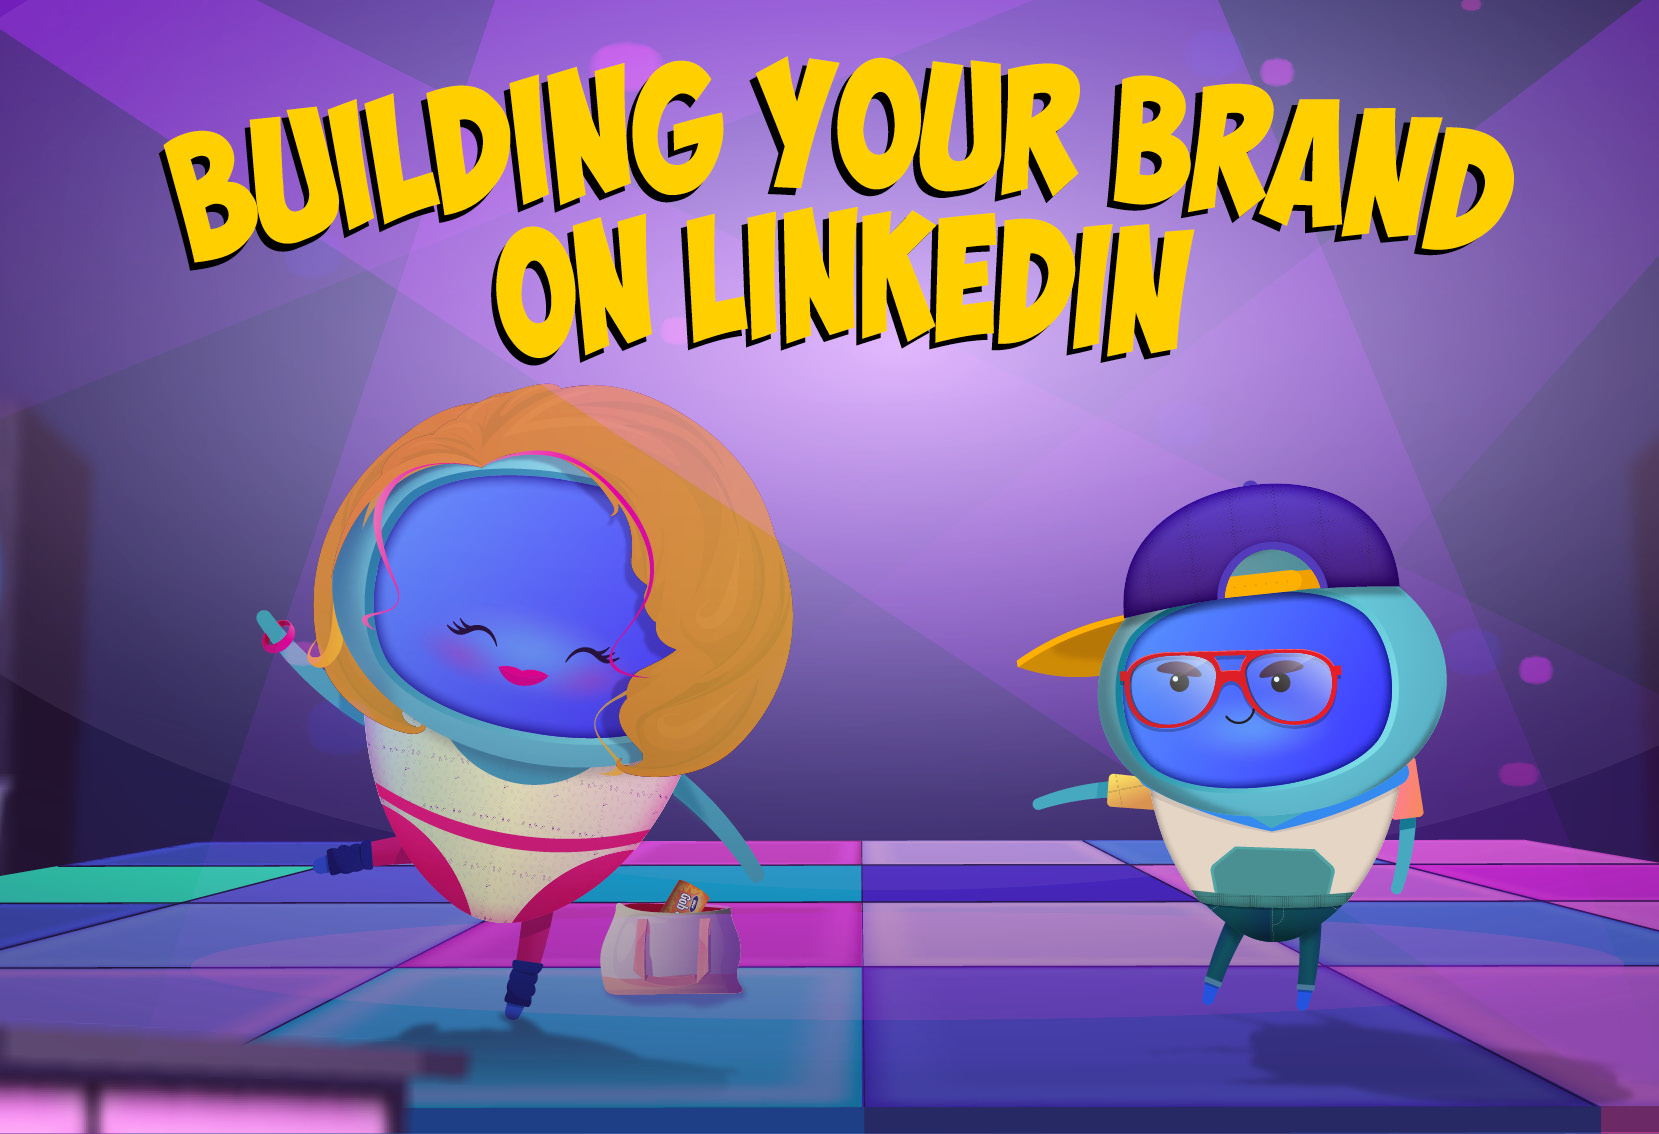 iAM 00183 - Building Your Brand on LinkedIn - LMS Thumbnail